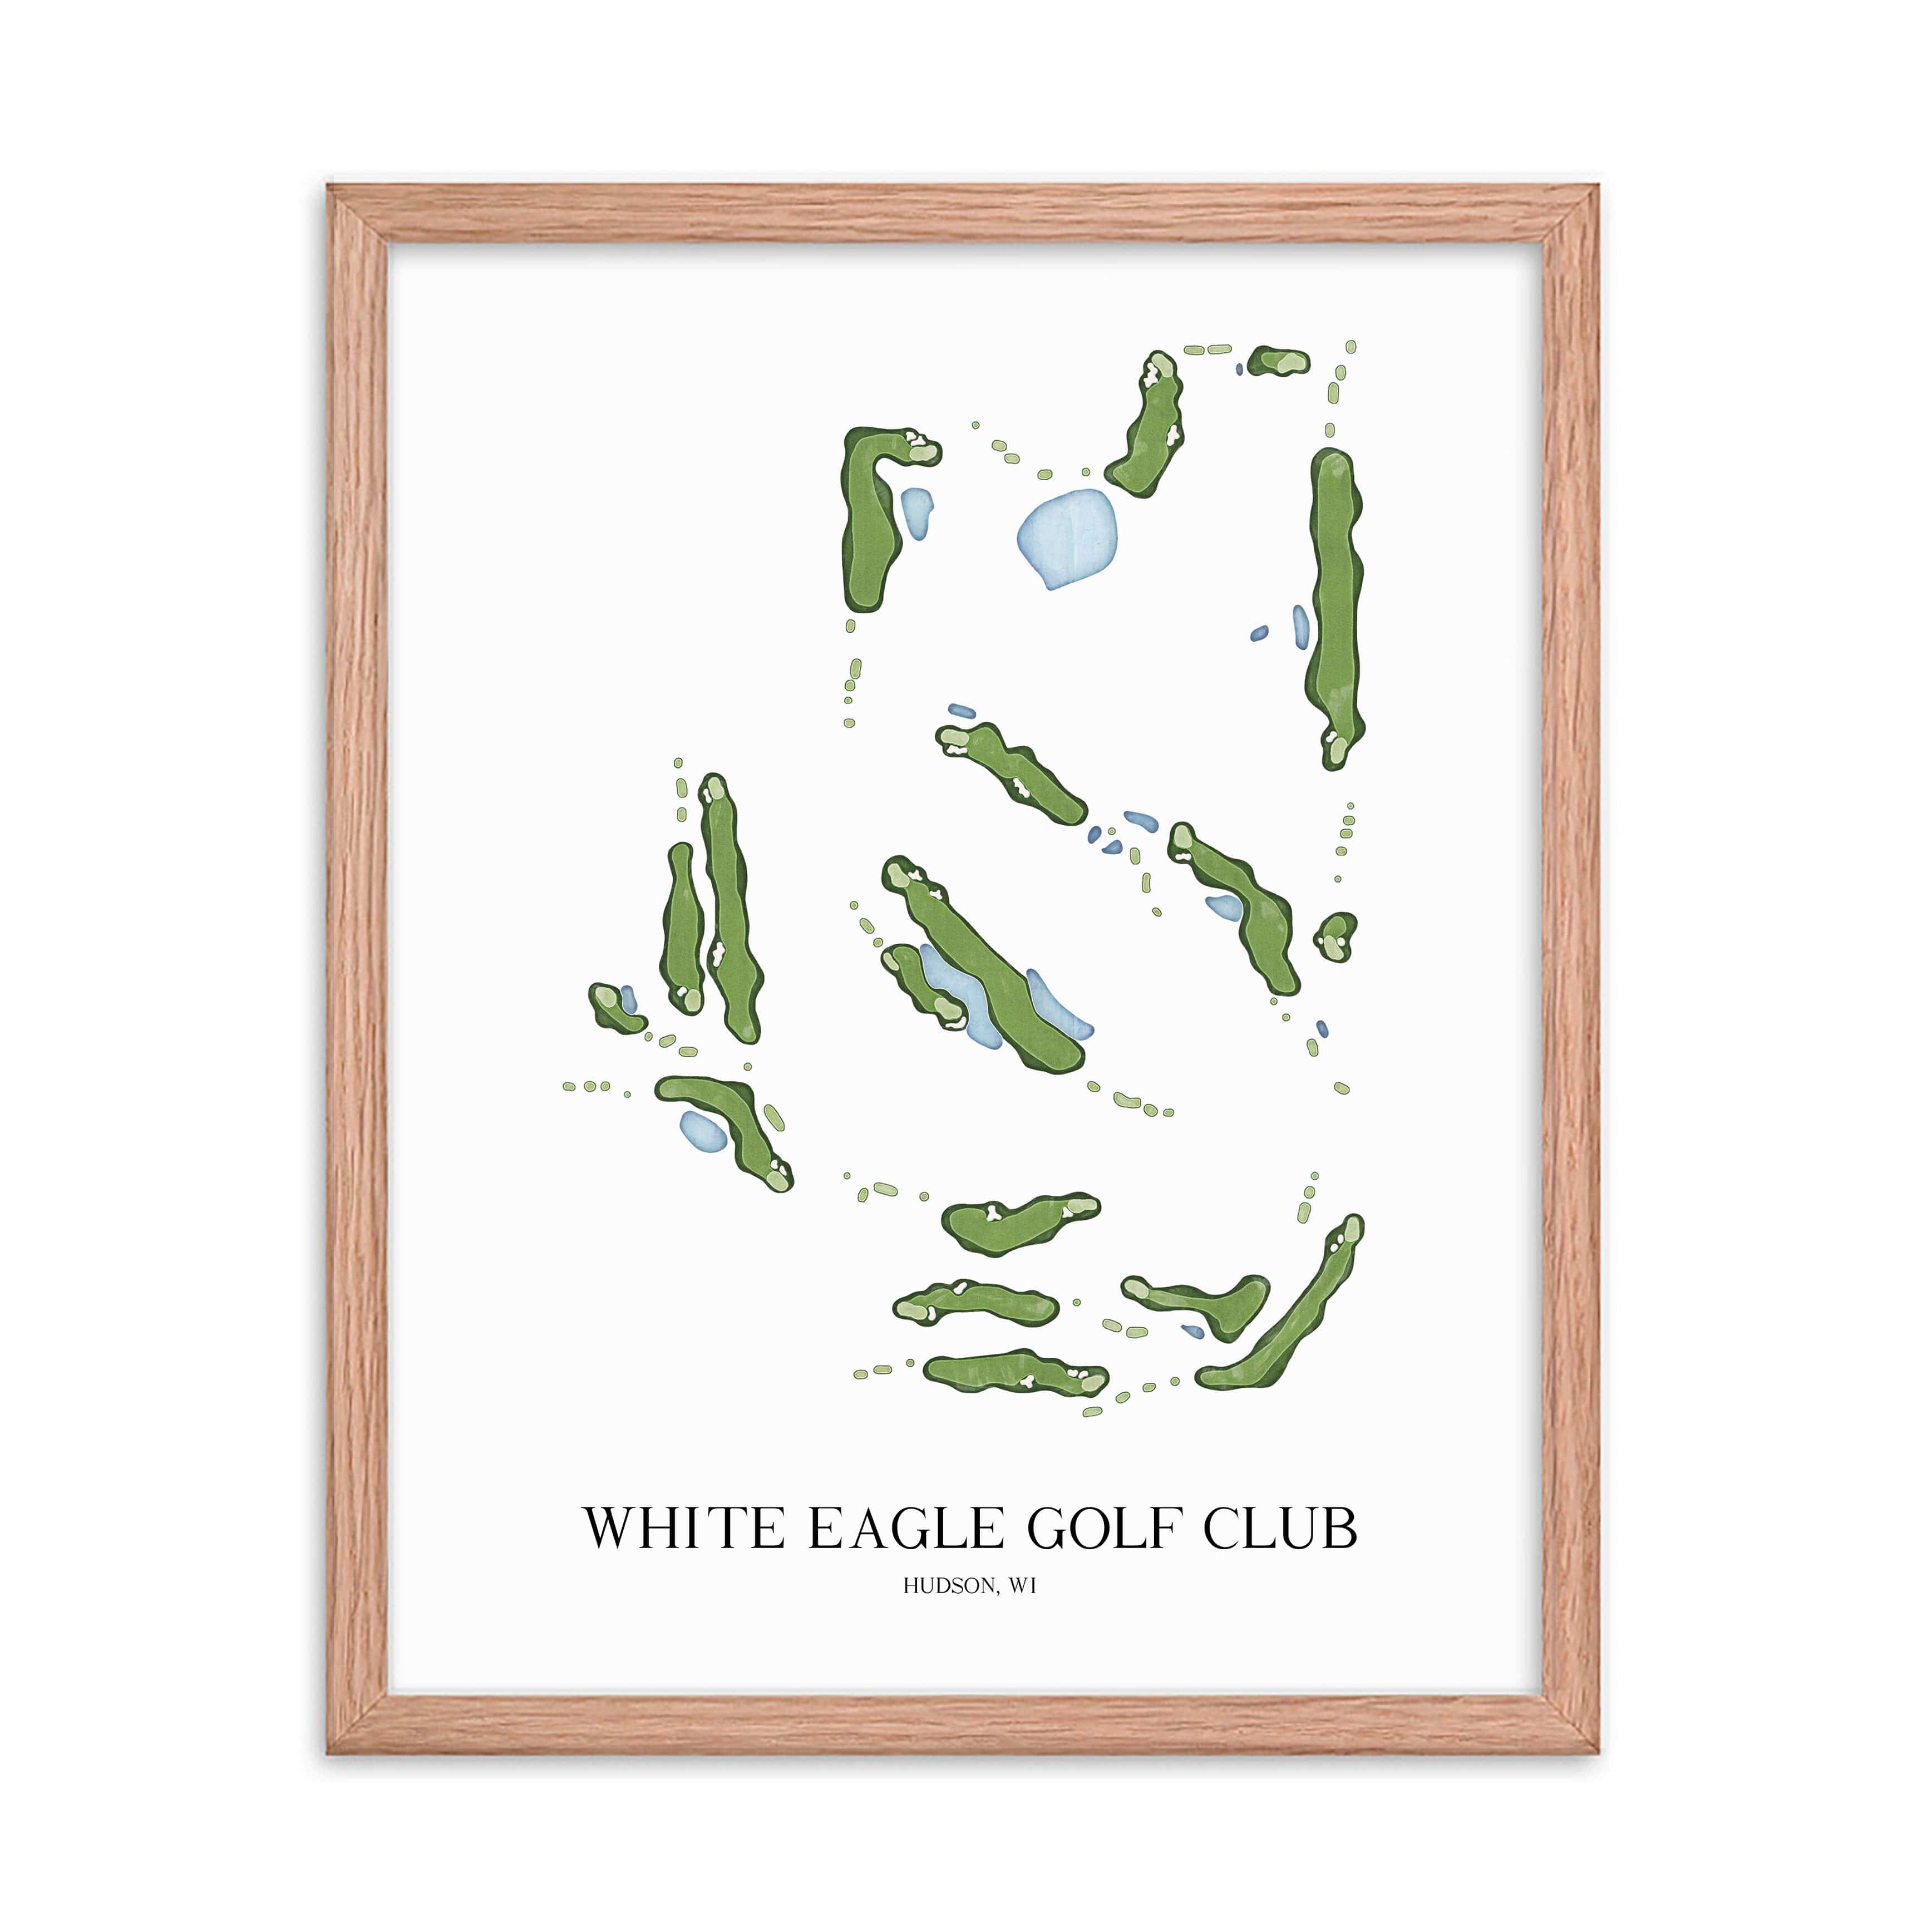 The 19th Hole Golf Shop - Golf Course Prints -  White Eagle Golf Club Golf Course Map